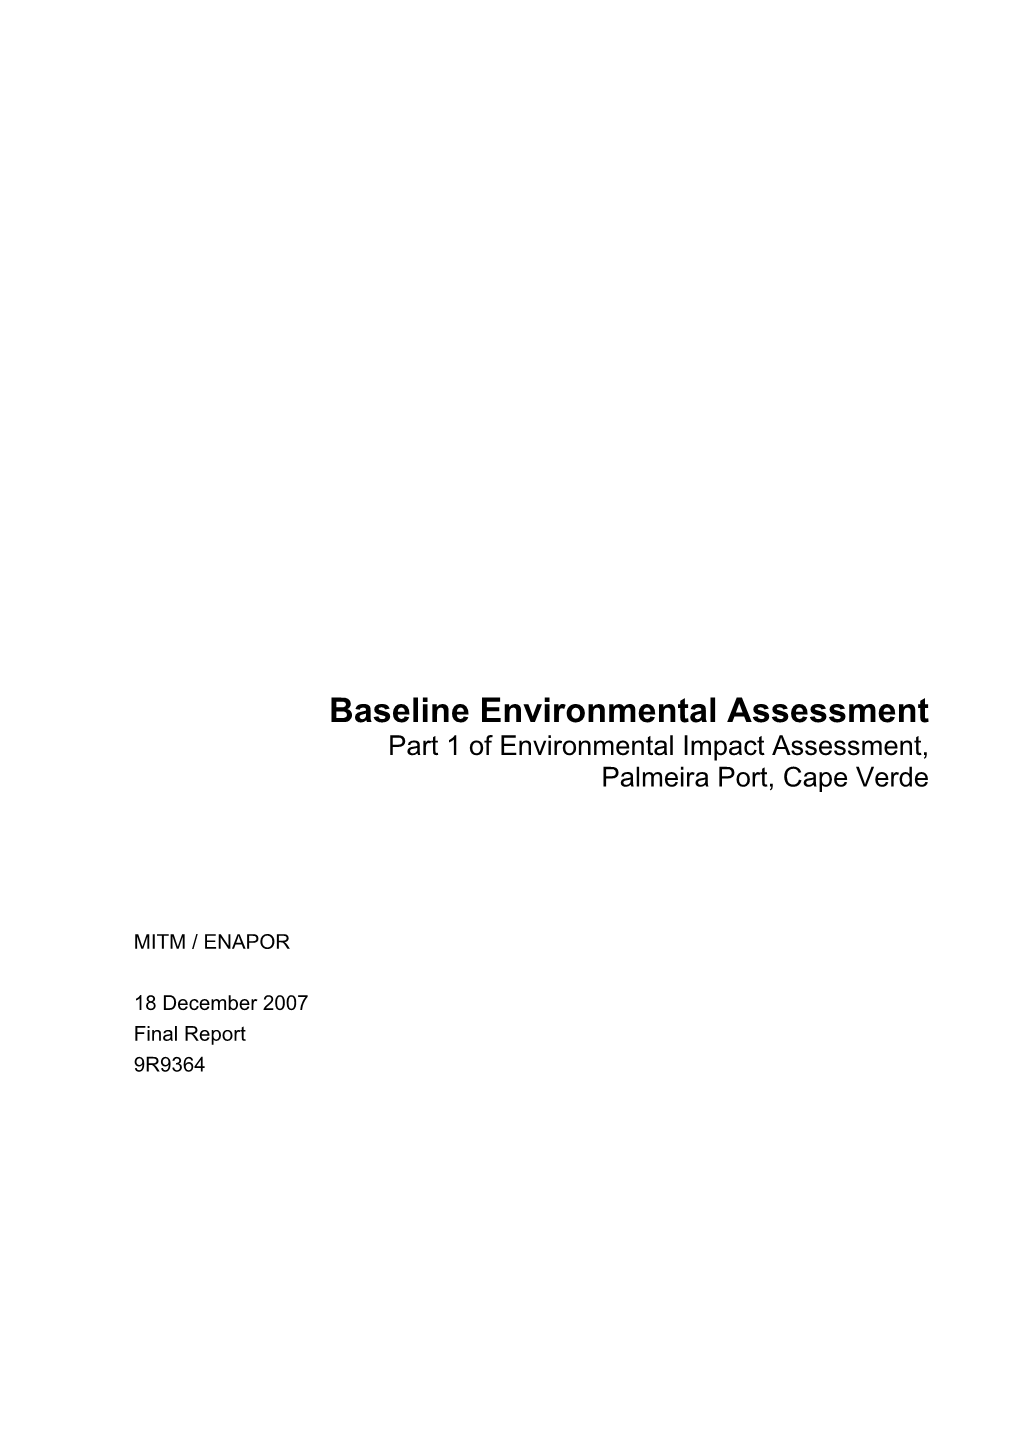 Baseline Environmental Assessment Part 1 of Environmental Impact Assessment, Palmeira Port, Cape Verde